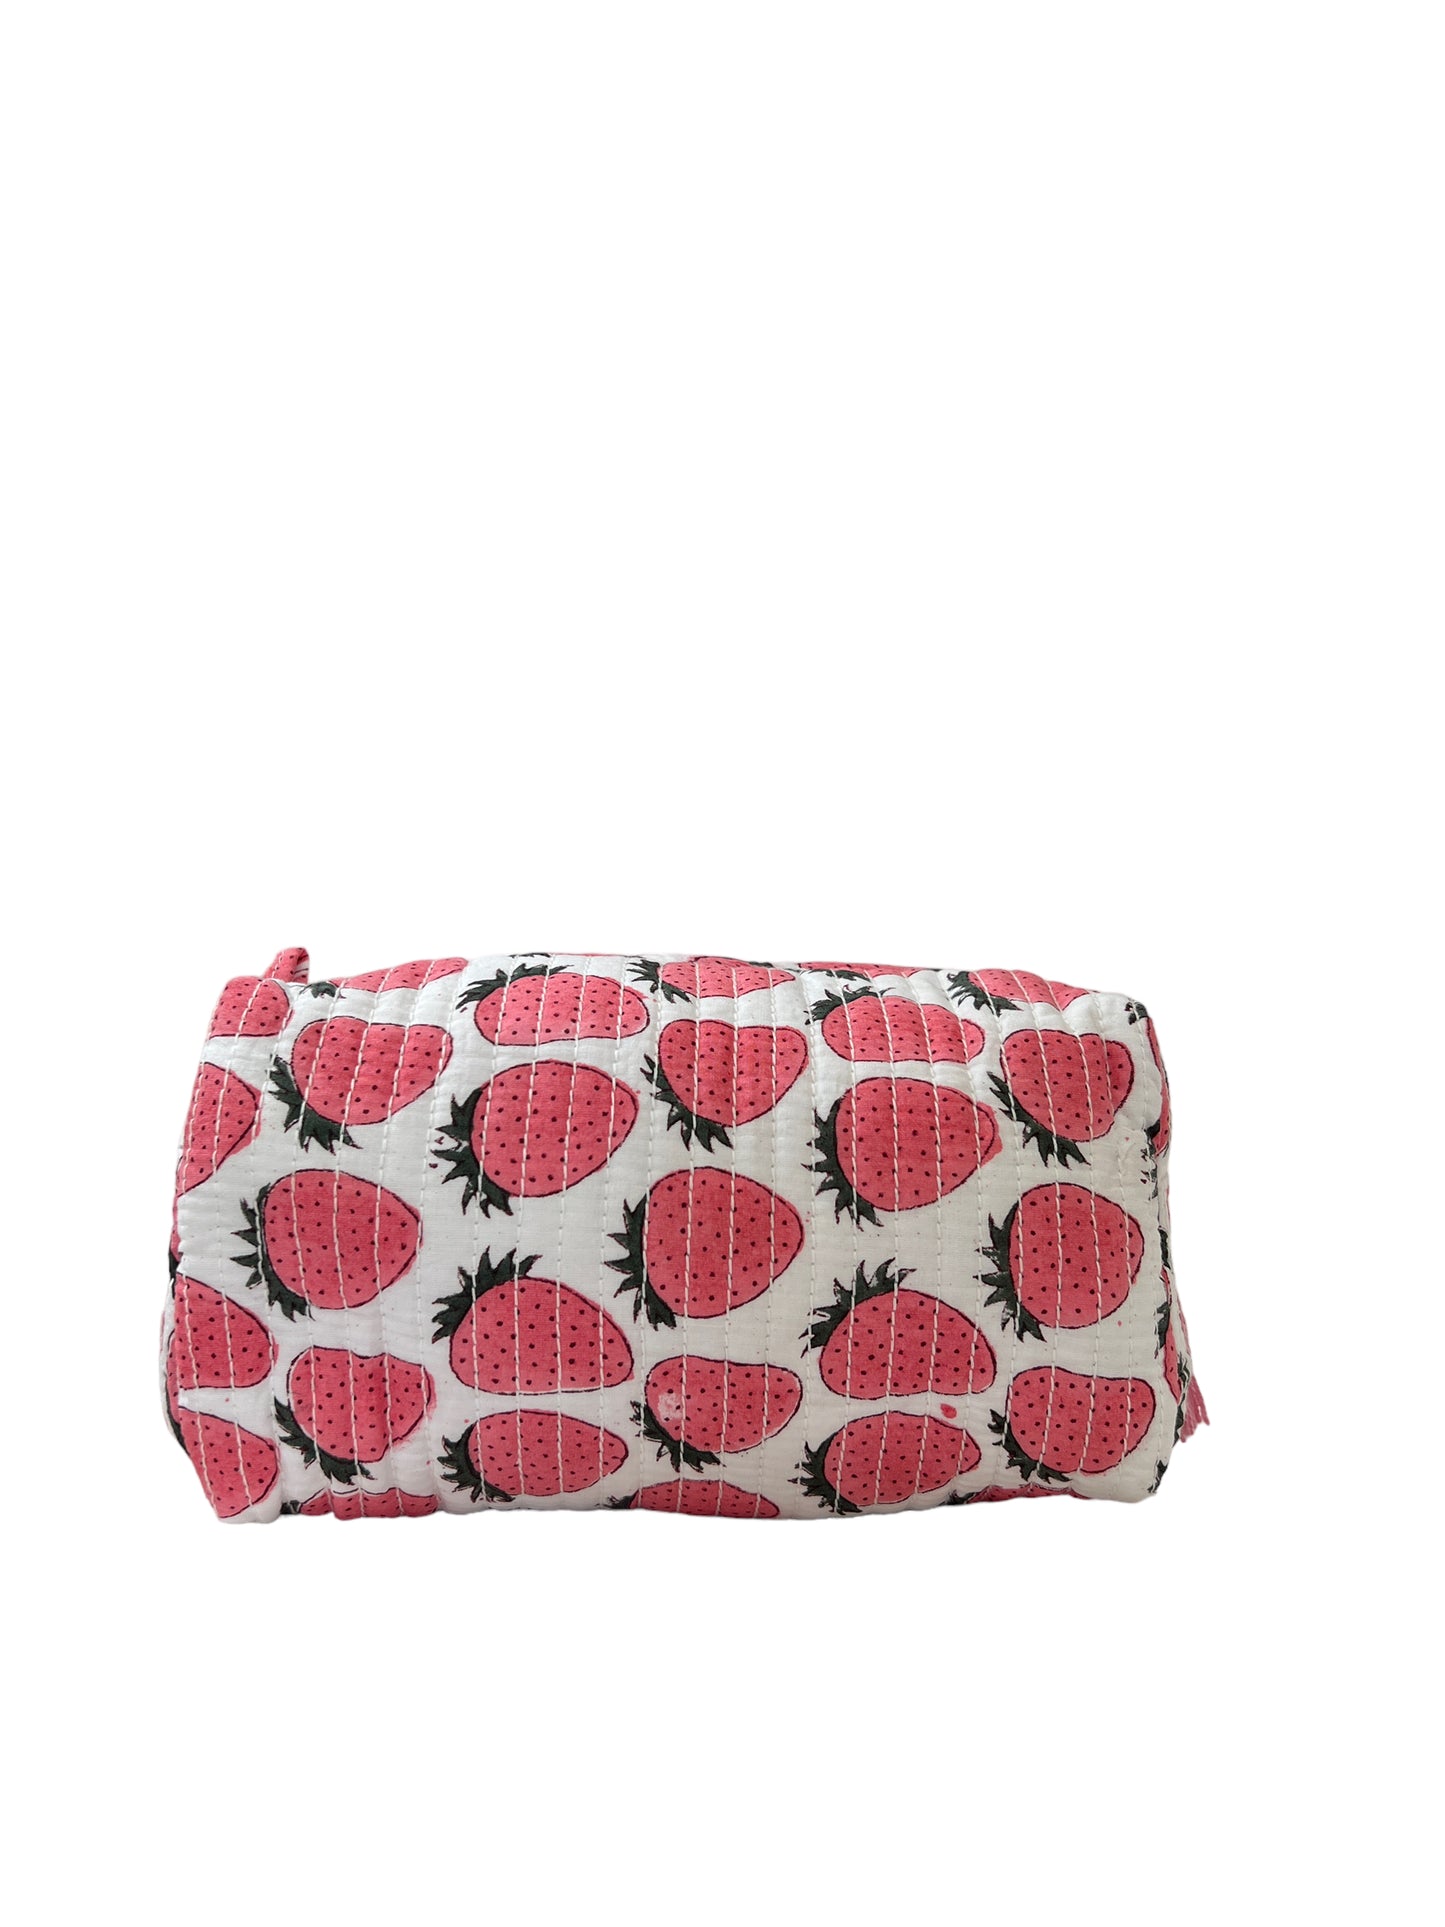 Make Up Bag Strawberry Pink (M001)